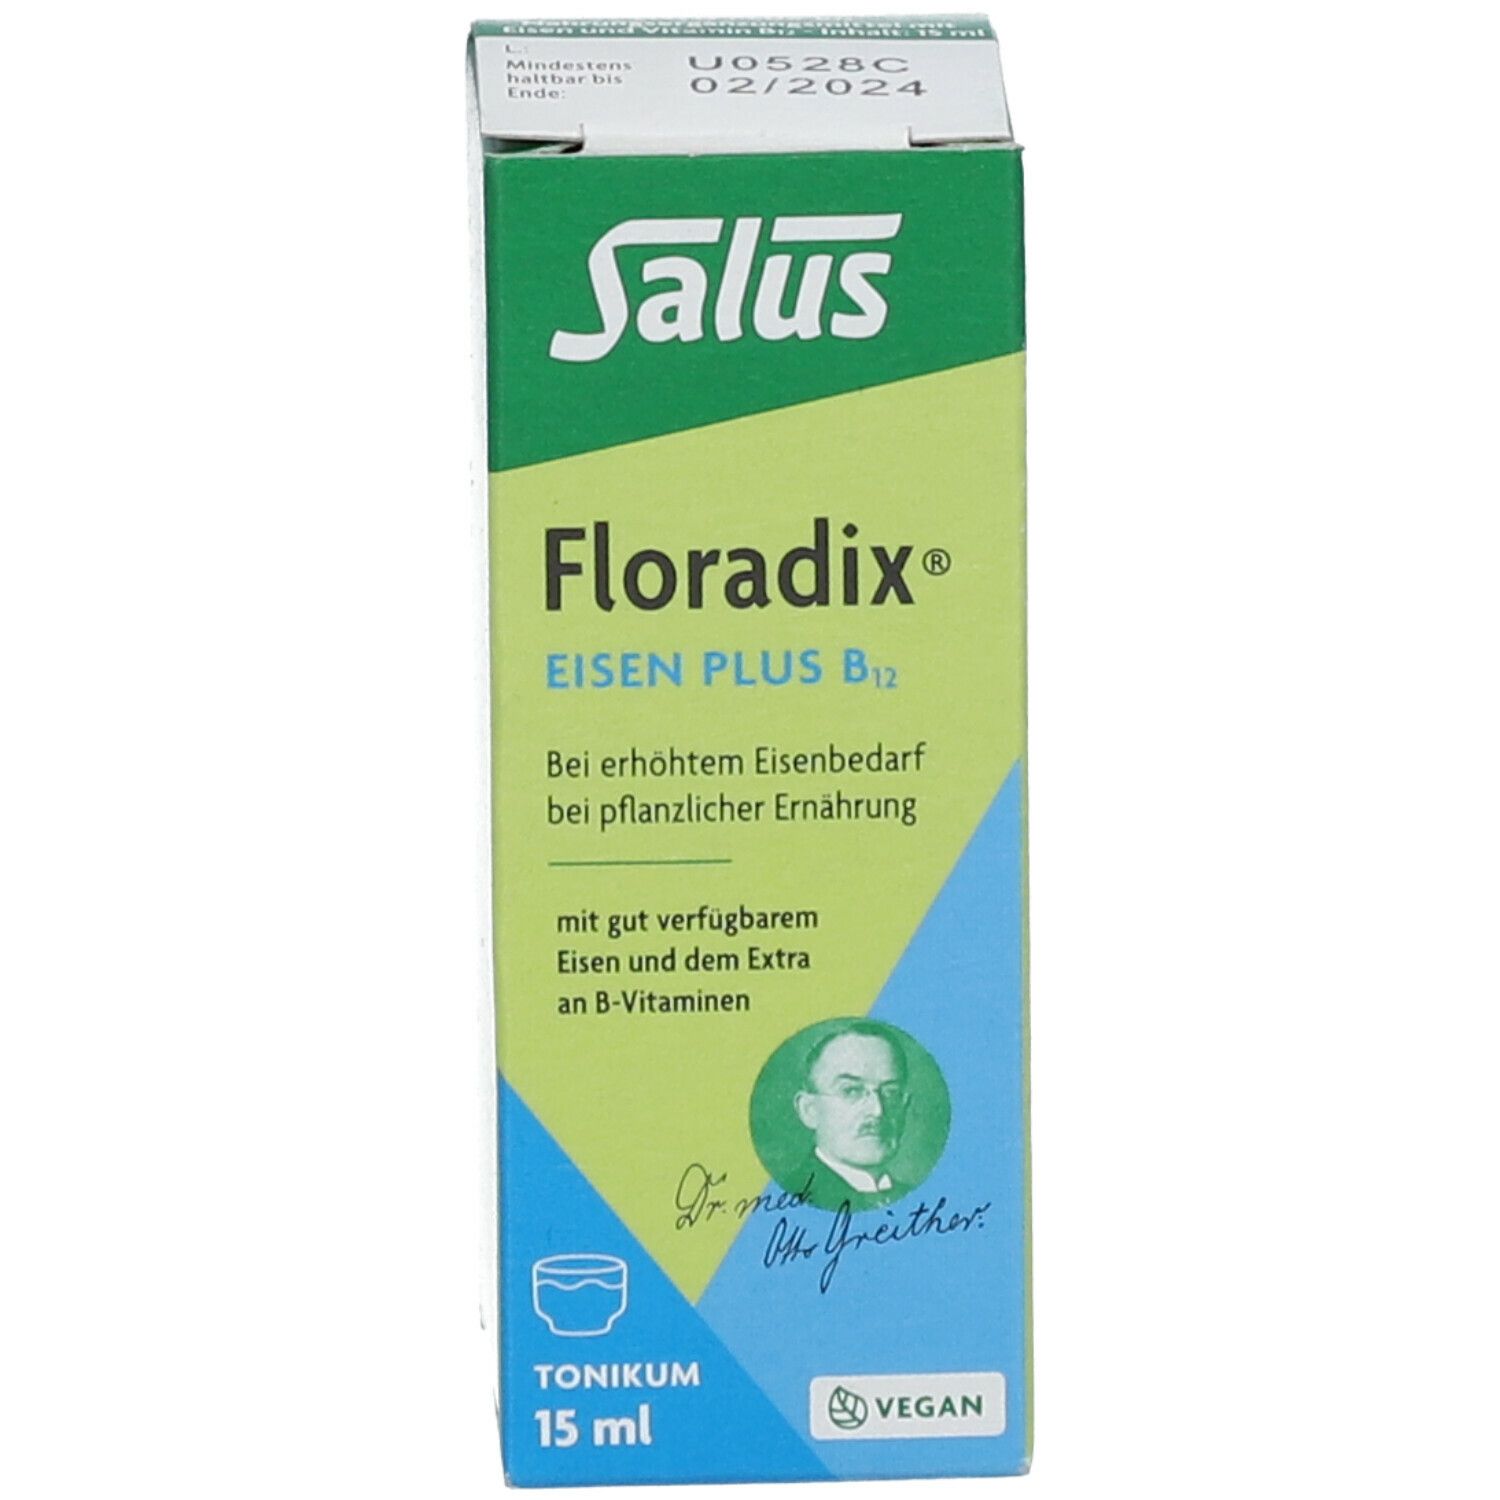 Salus® Floradix® Eisen plus B12 vegan